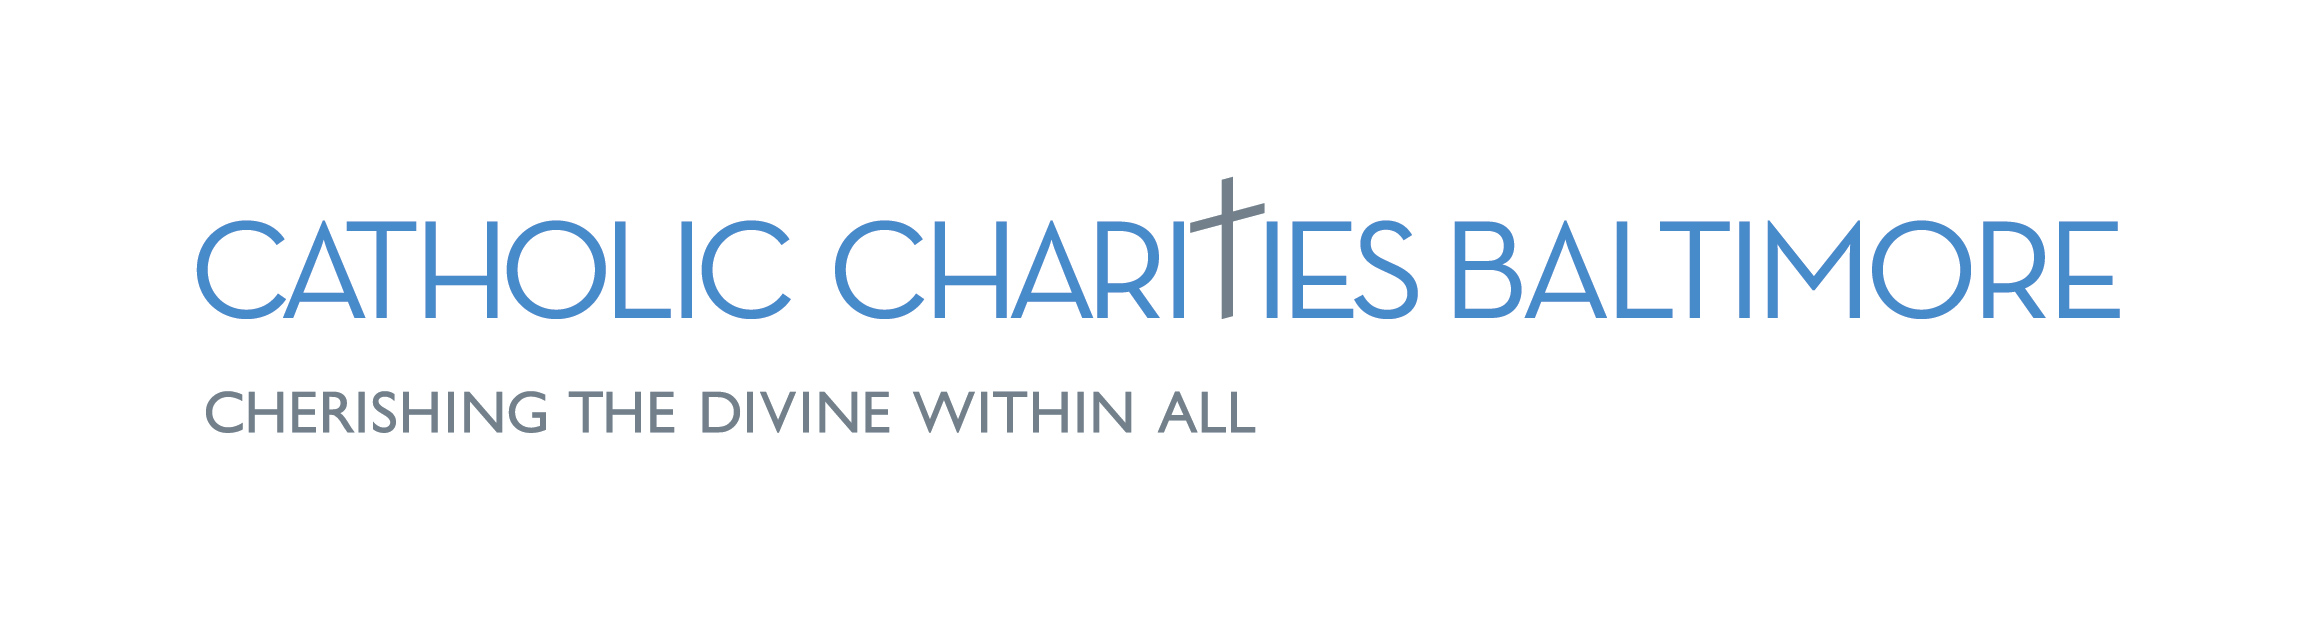 Catholic Charities of Baltimore Company Logo